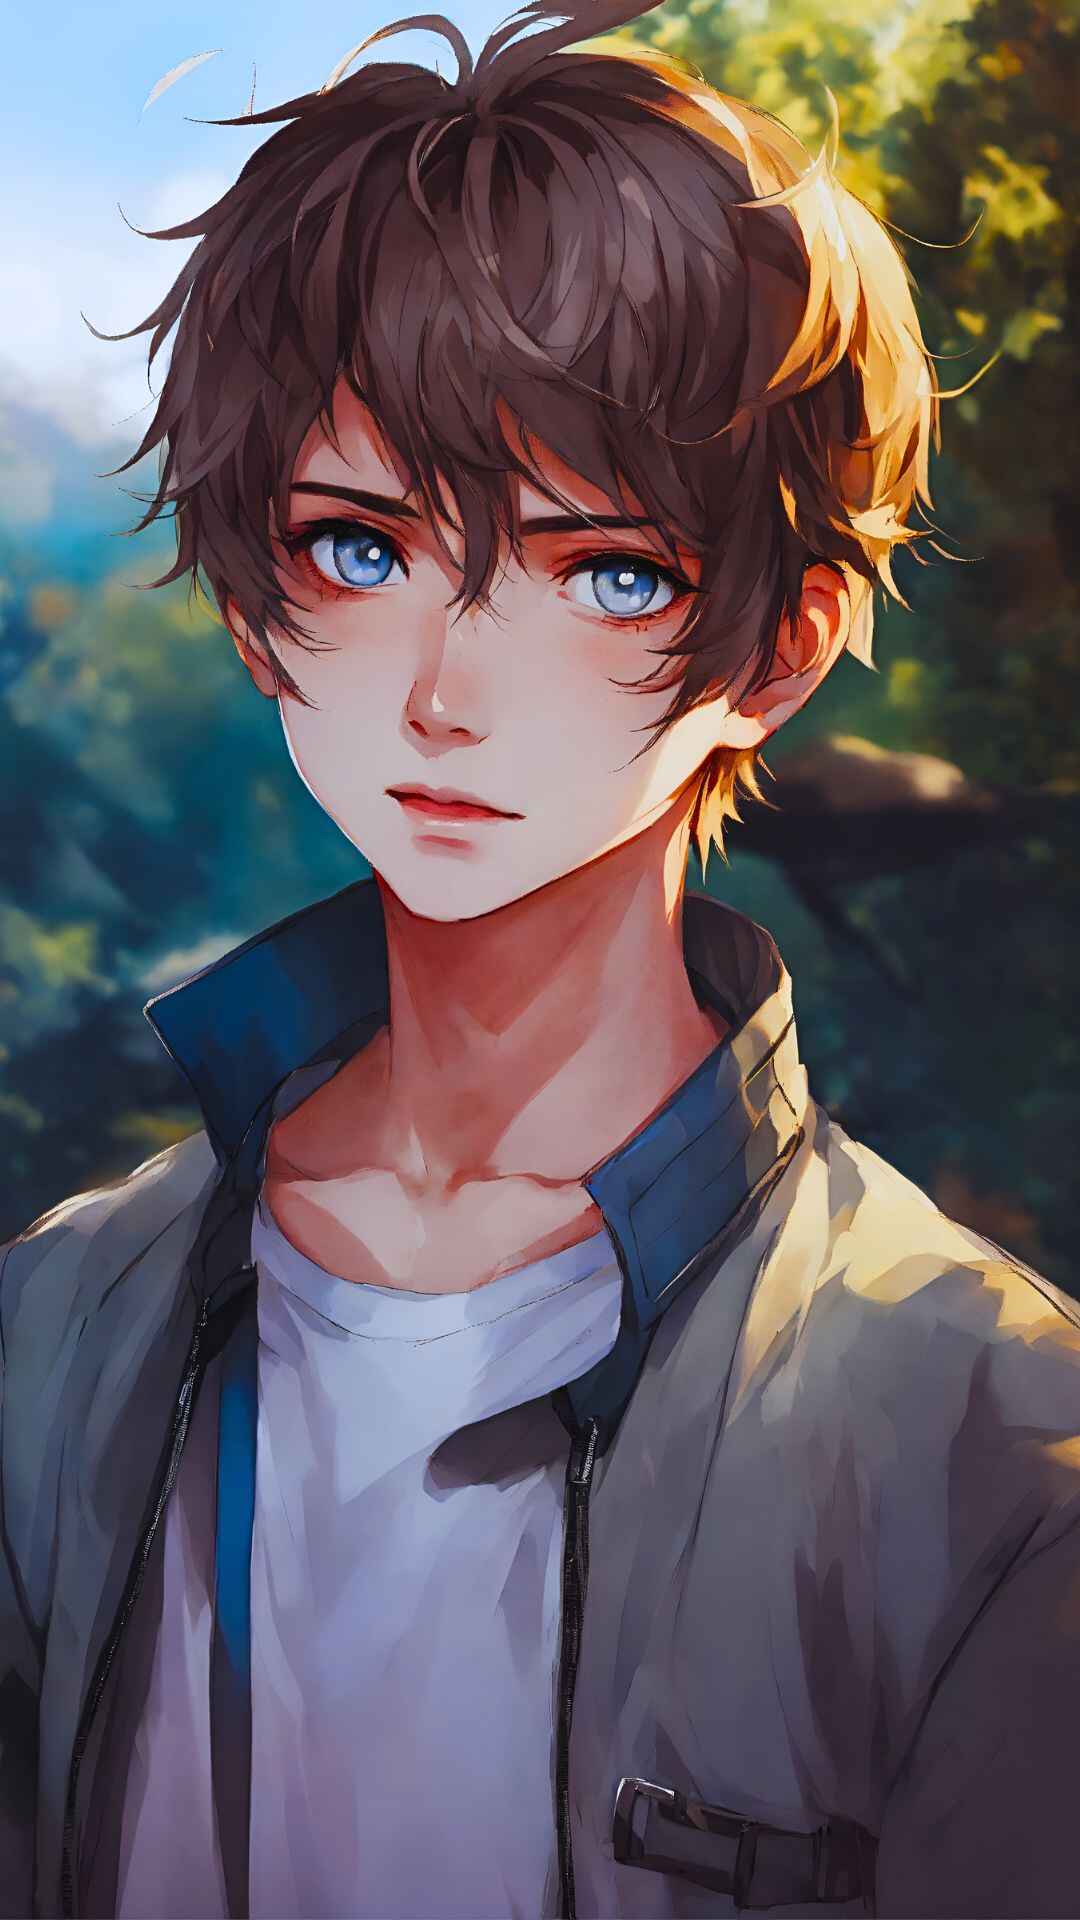 Cute Anime Boy Wallpaper HD